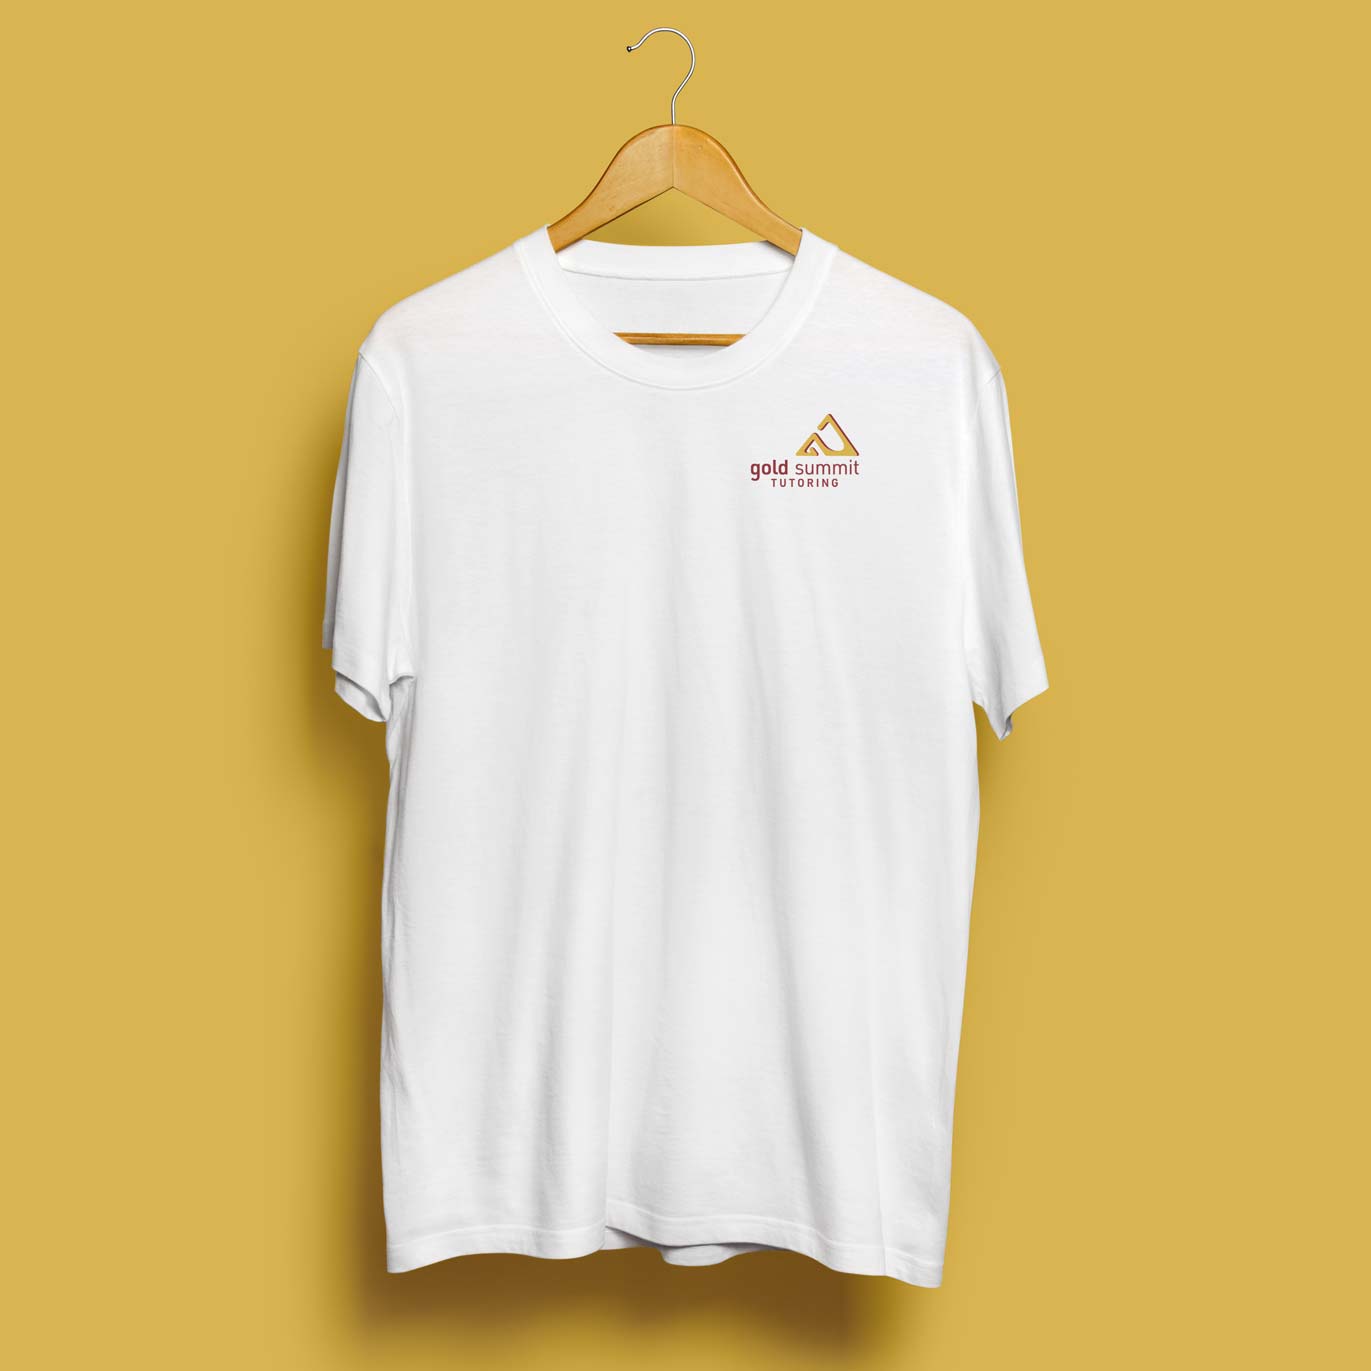 T-shirt and Logo design for Gold Summit Tutoring by Alina Demidova